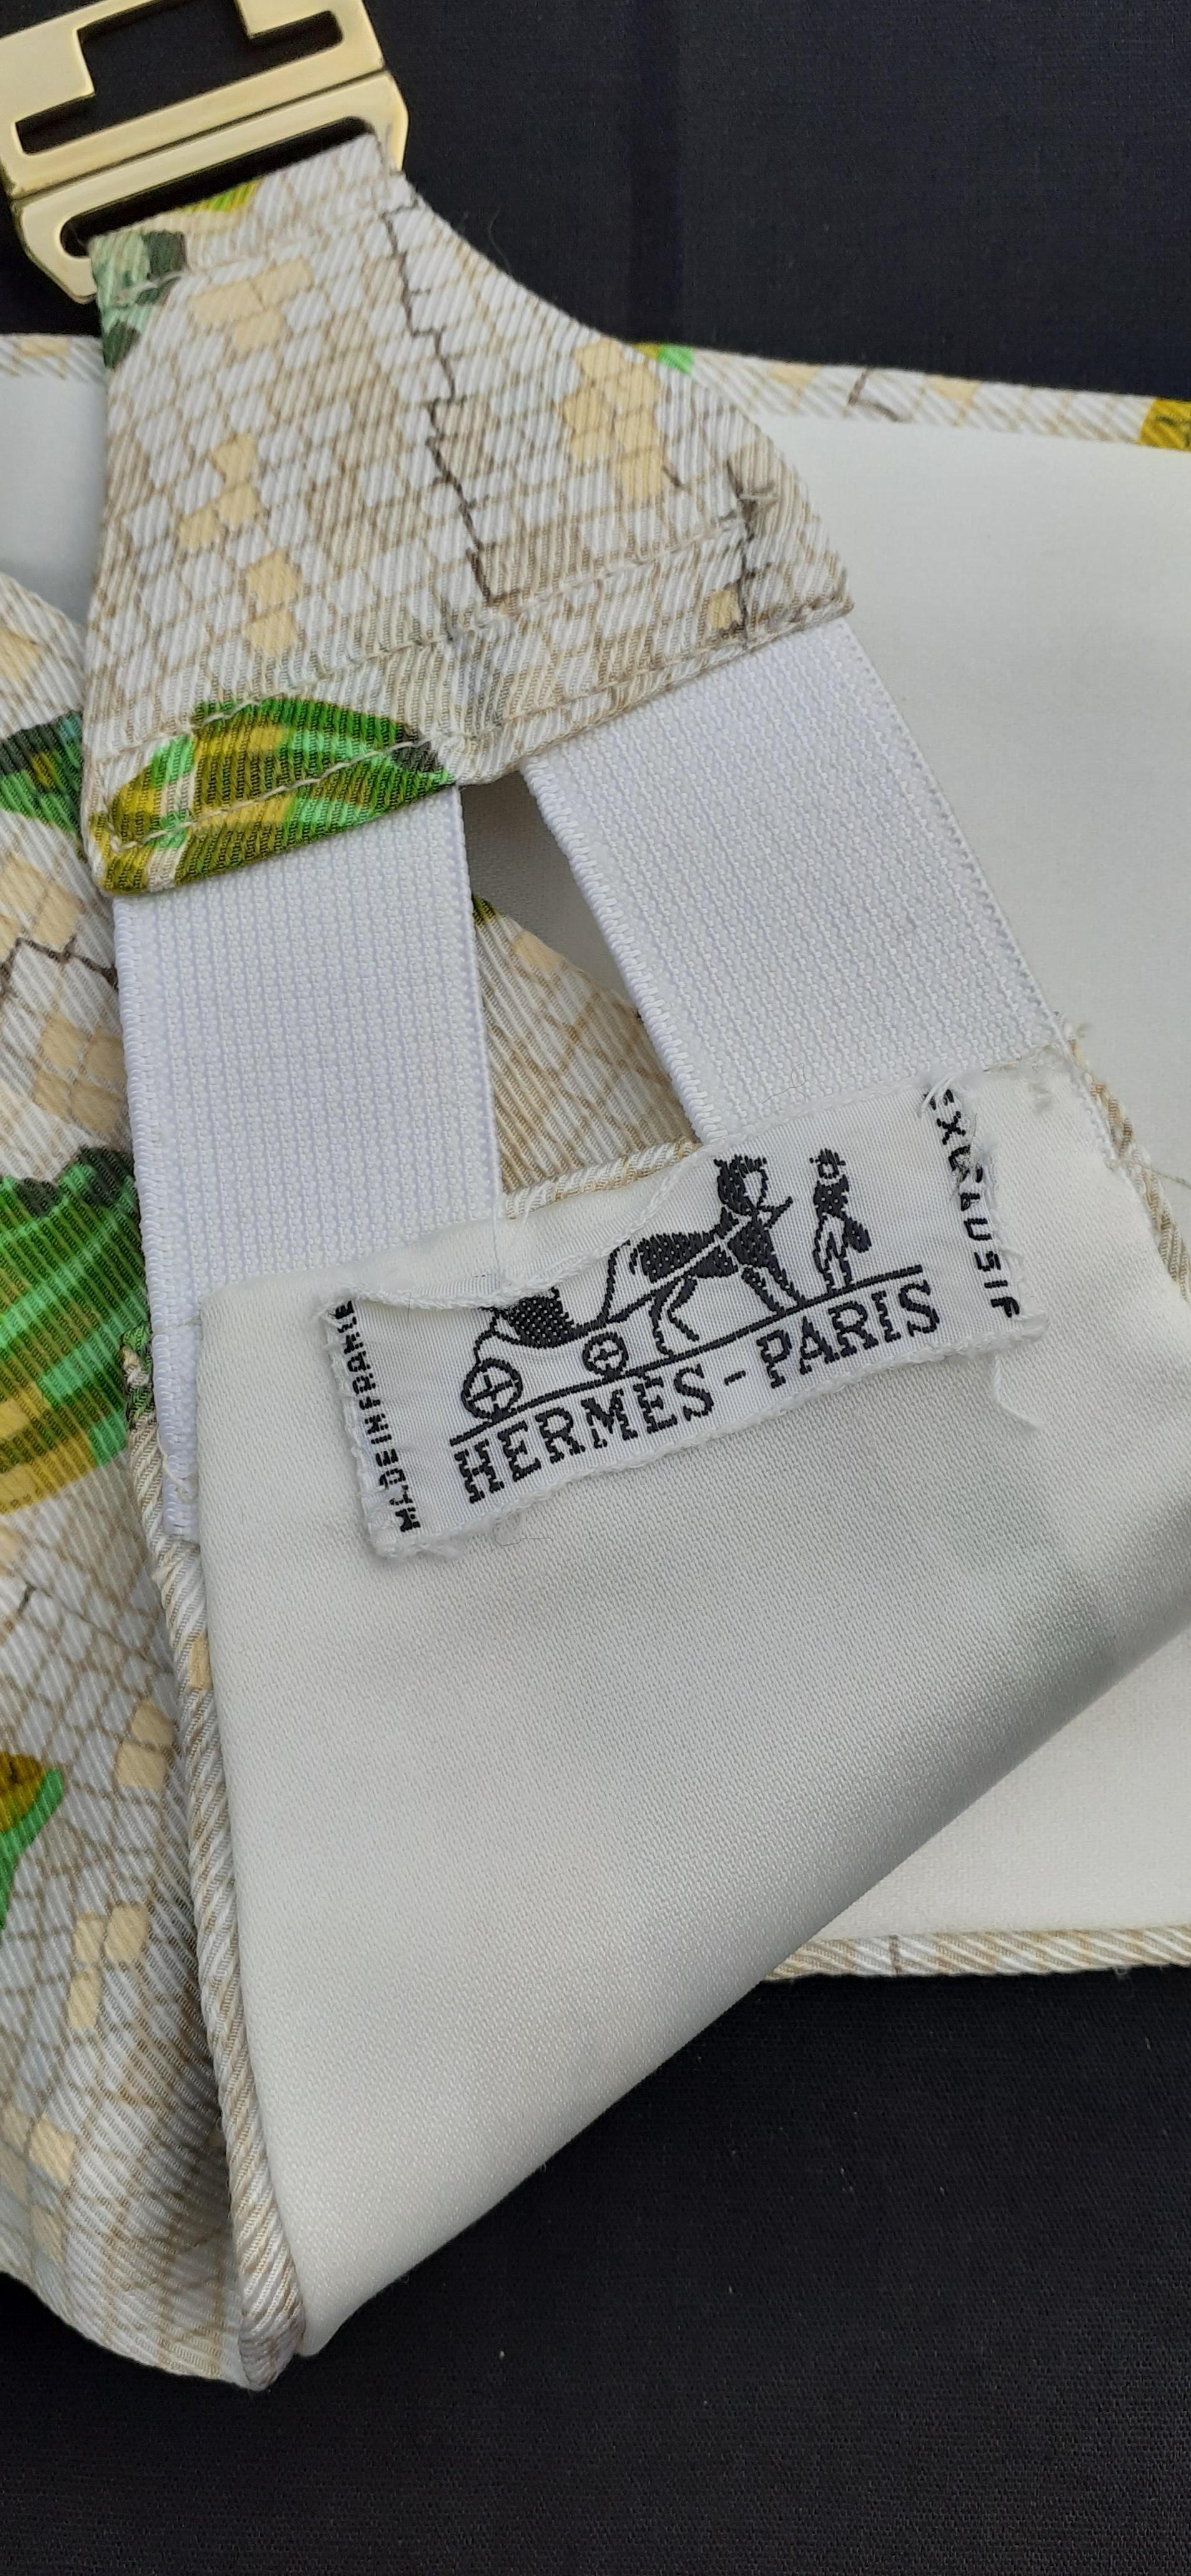 Rare Hermès Set of Matching Scarf and Cummerbund Seashells on Mosaic in Silk For Sale 3